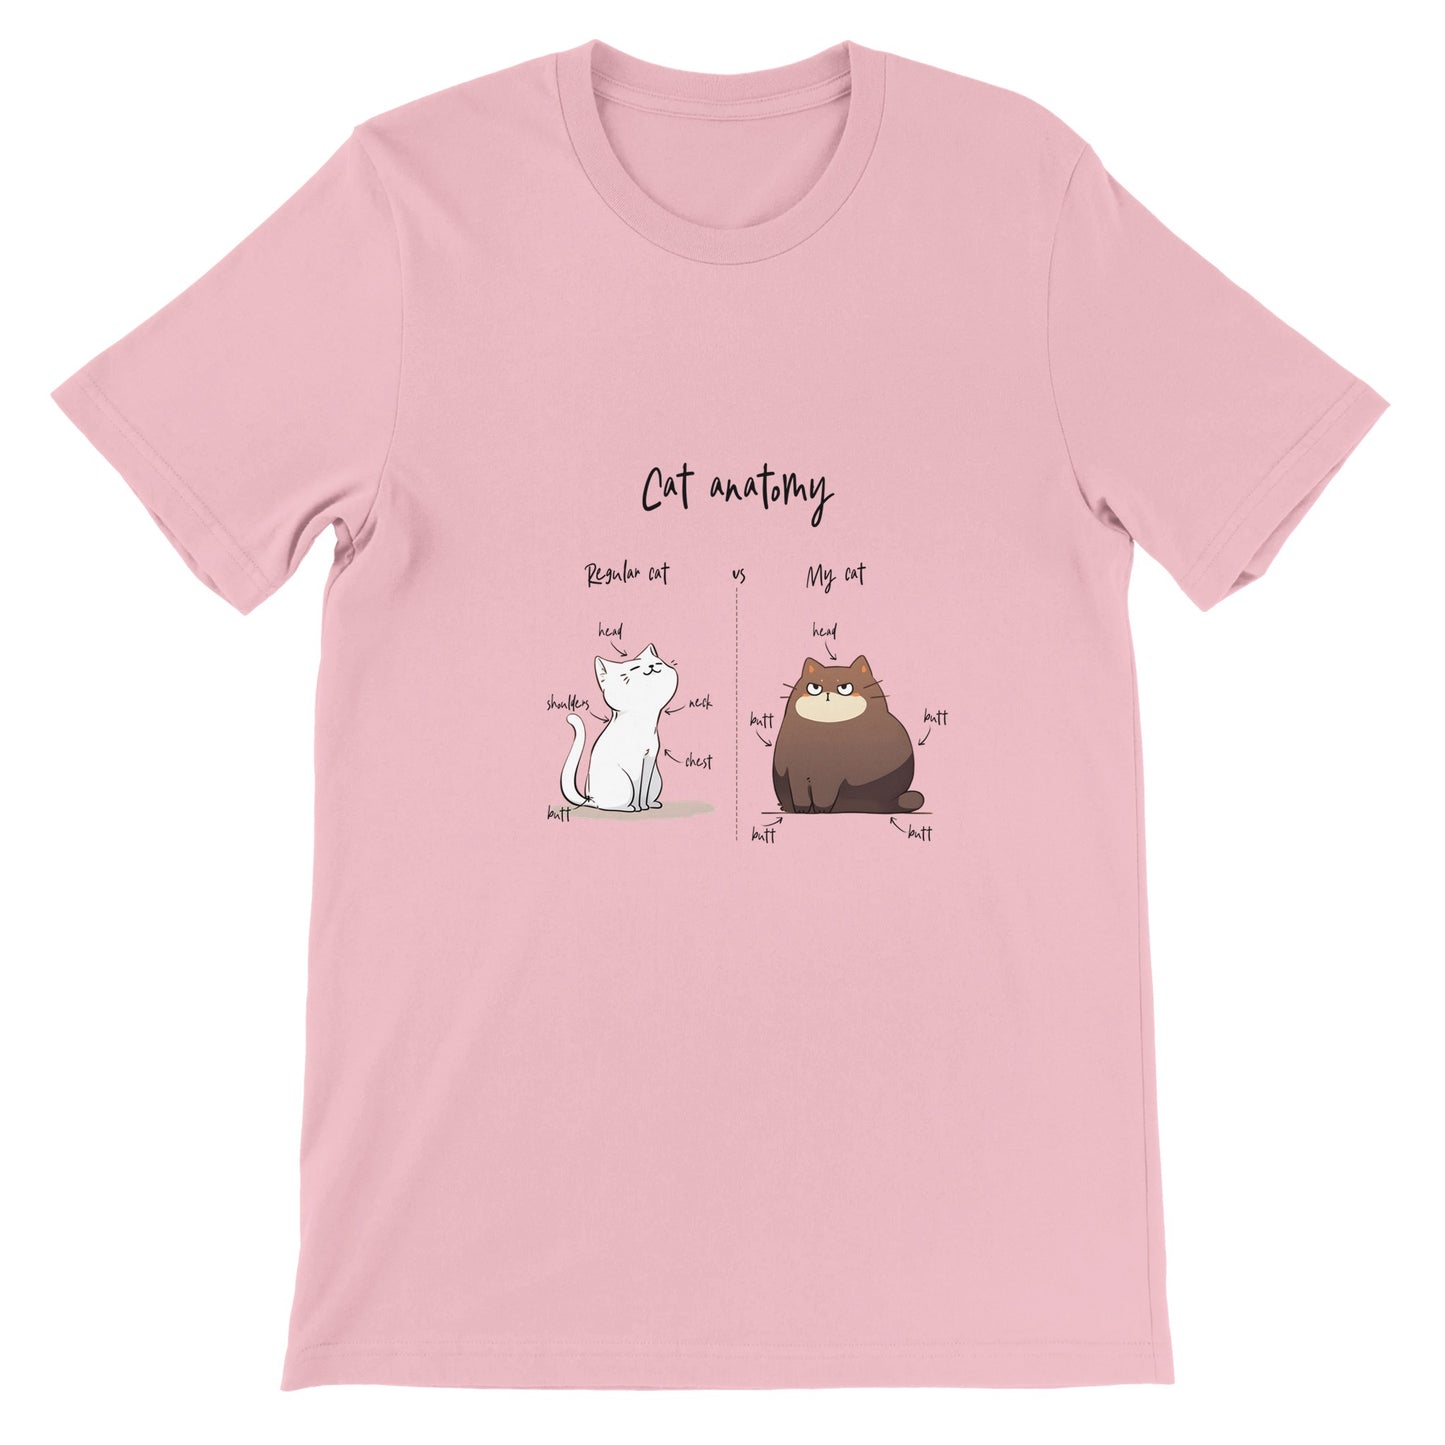 Budget Unisex Crewneck T-shirt/Cat-Anatomy